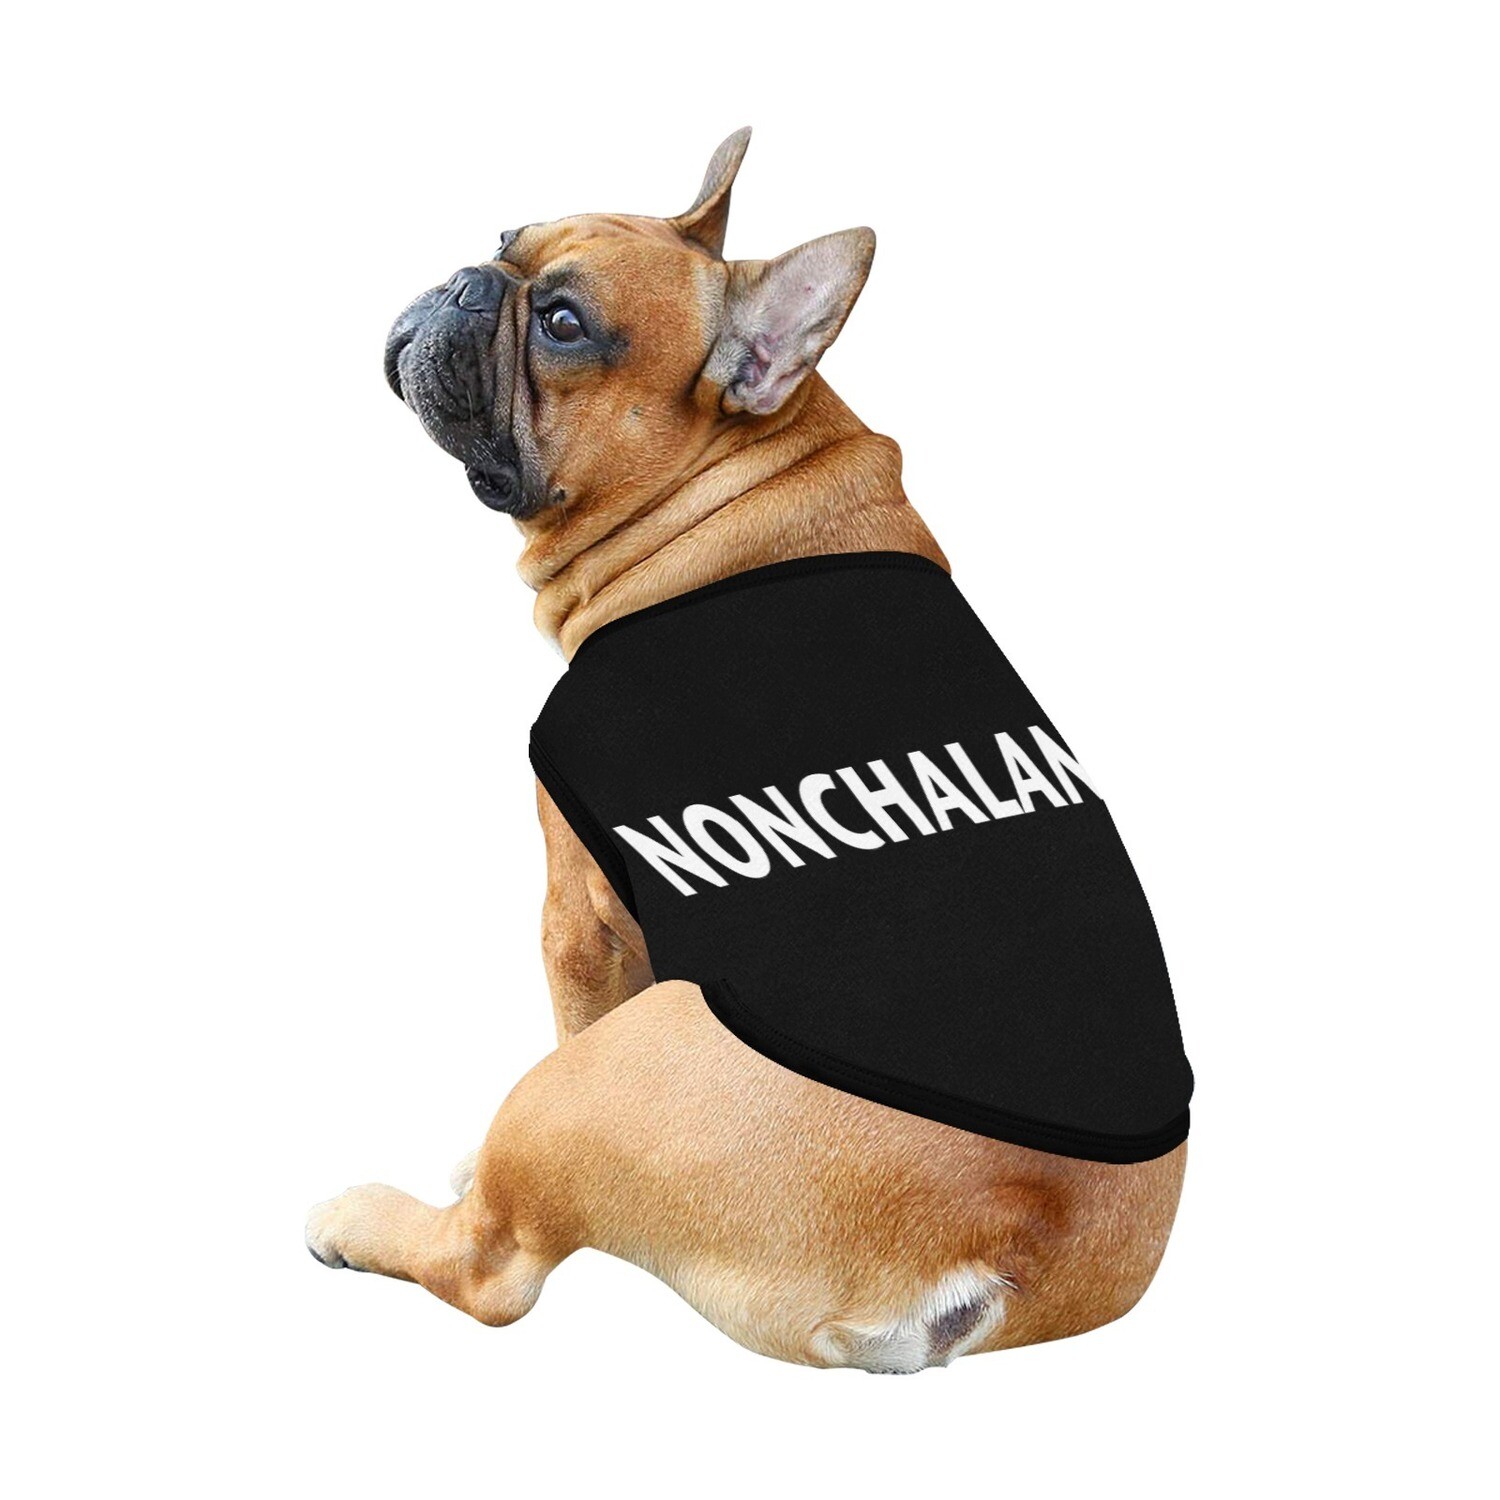 🐕 David Rose Nonchalance  Dog t-shirt, Dog Tank Top, Dog shirt, Dog clothes, Gifts, front back print, 7 sizes XS to 3XL, Schitt's Creek, TV series